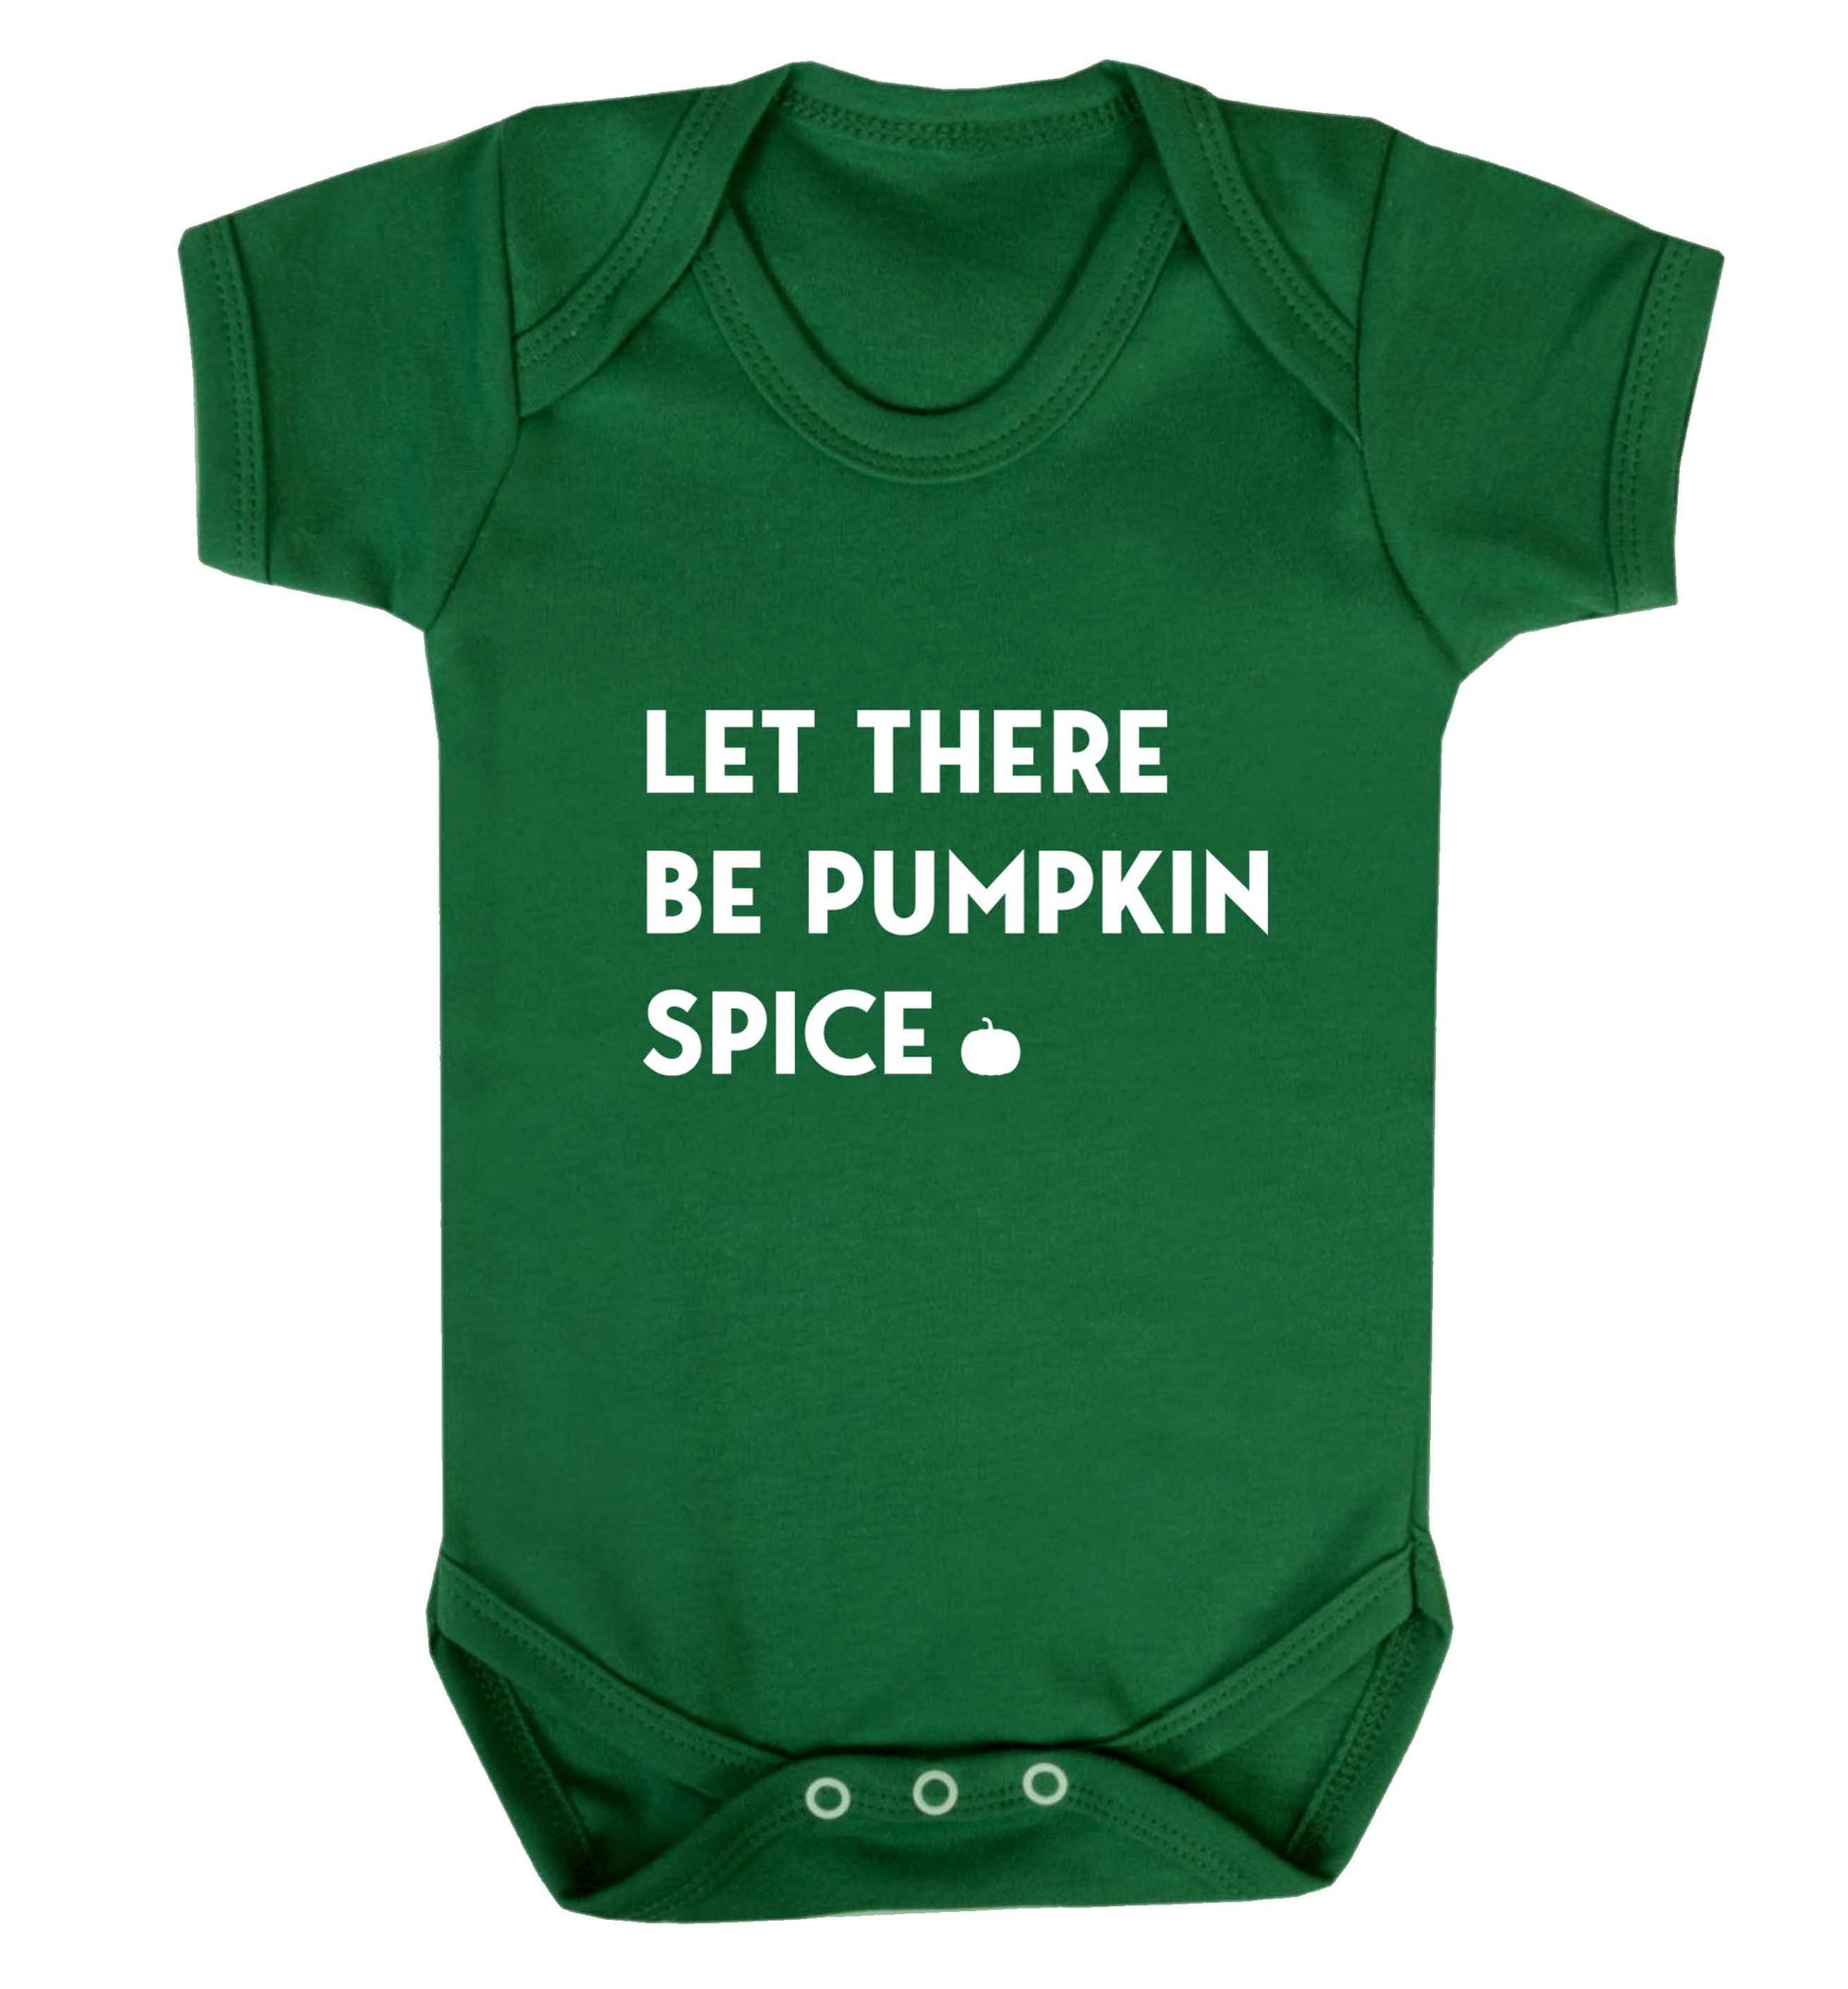 Let Be Pumpkin Spice baby vest green 18-24 months